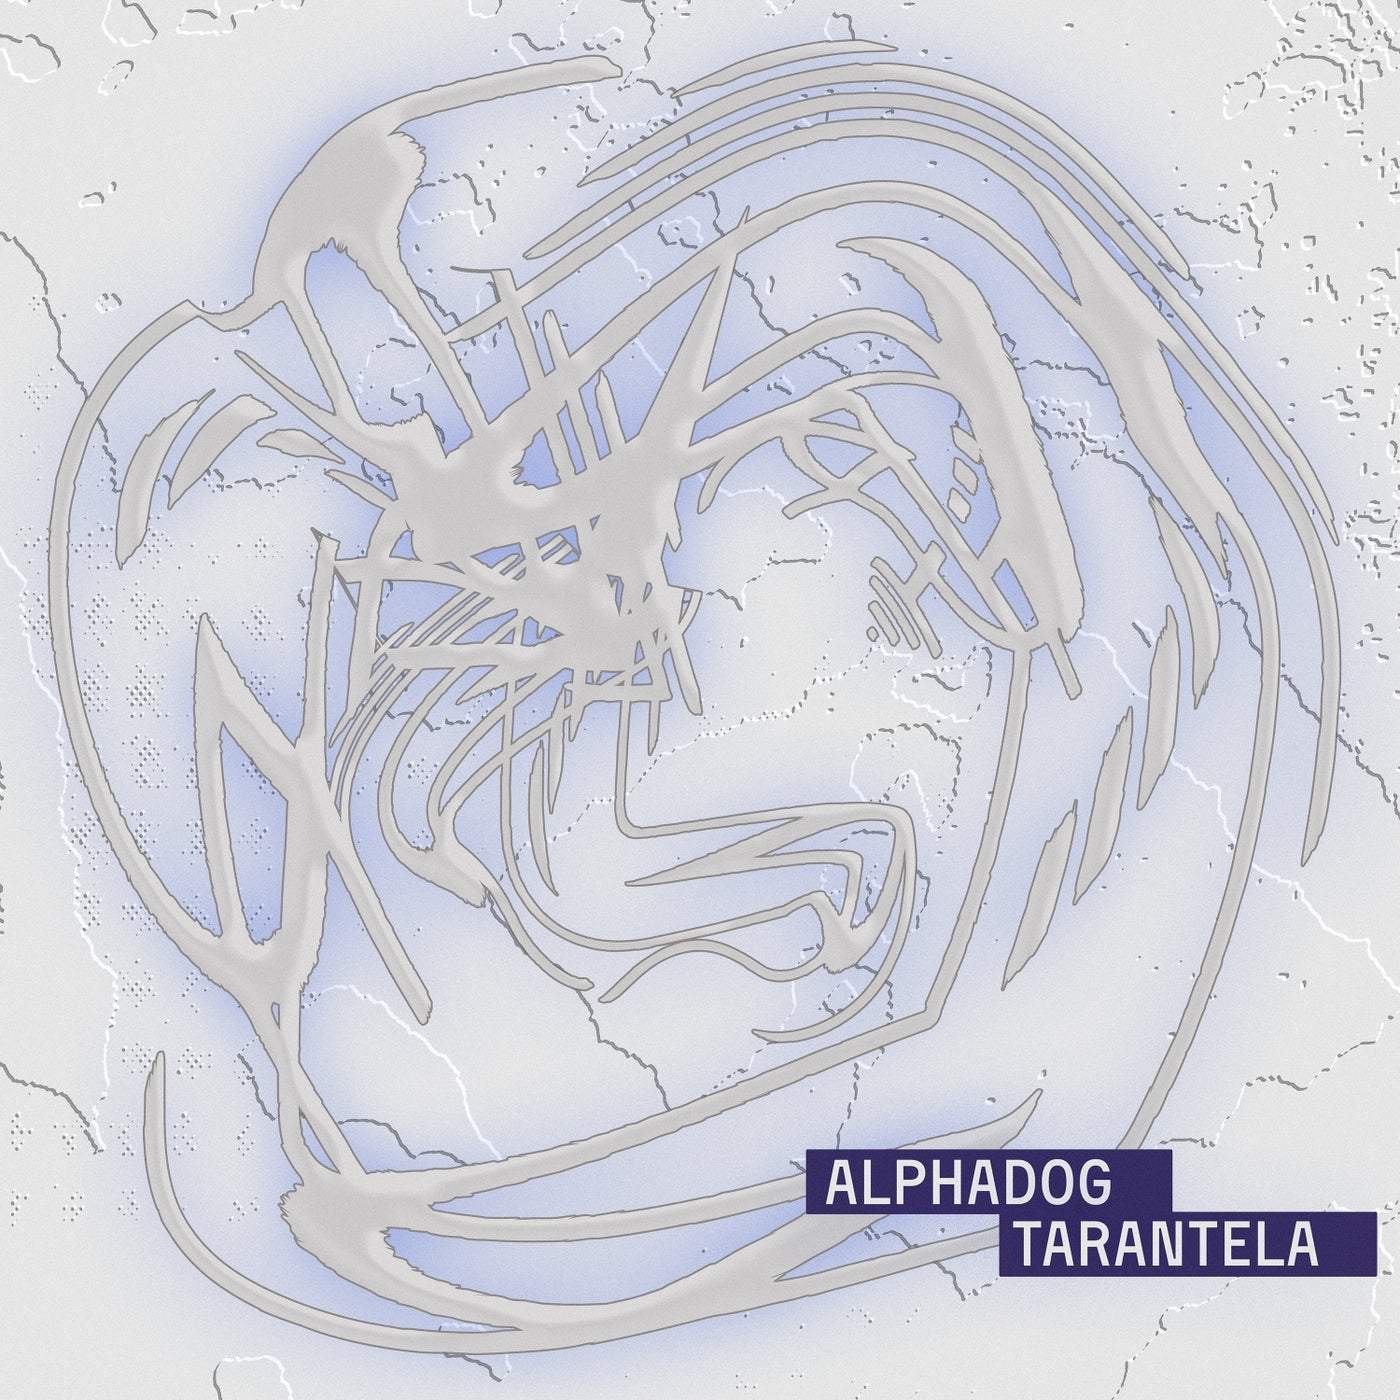 Download Alphadog - Tarantela EP on Electrobuzz